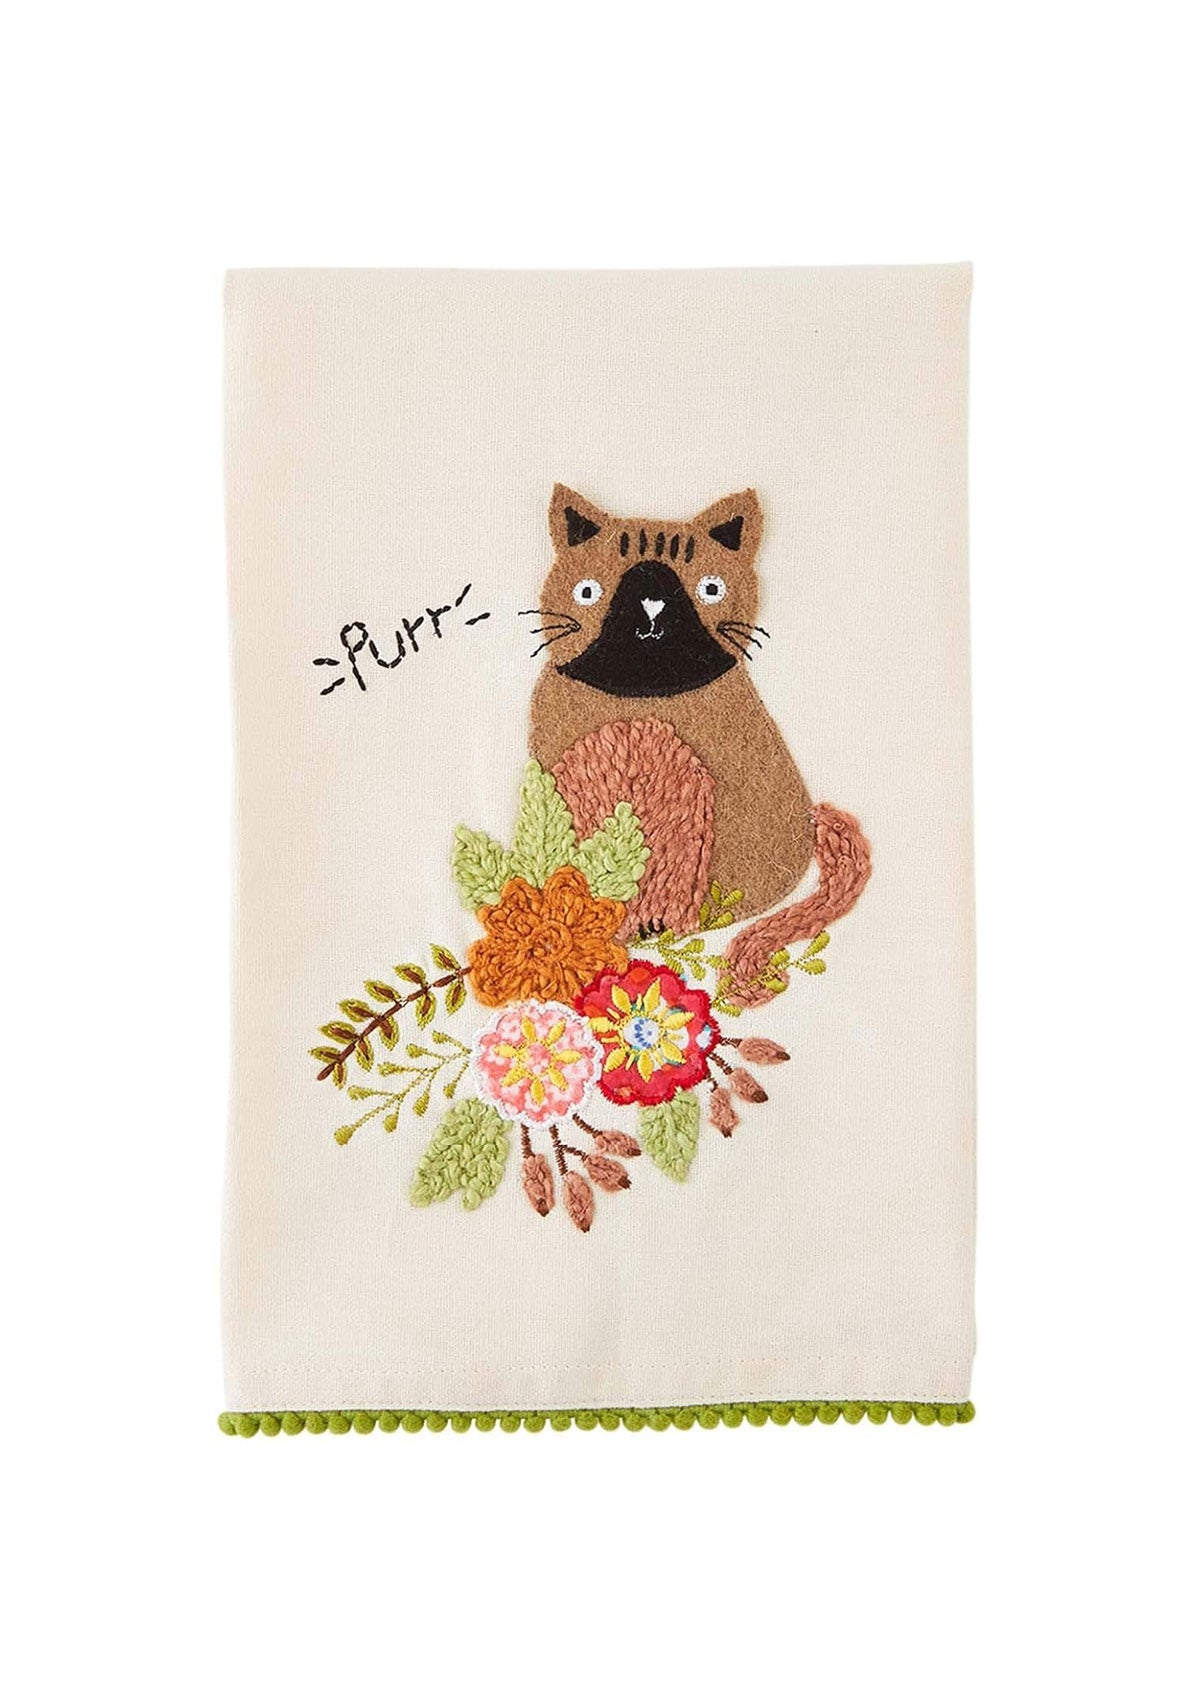 'Purr' Cat Hand Towel -Mud Pie- Ruby Jane-